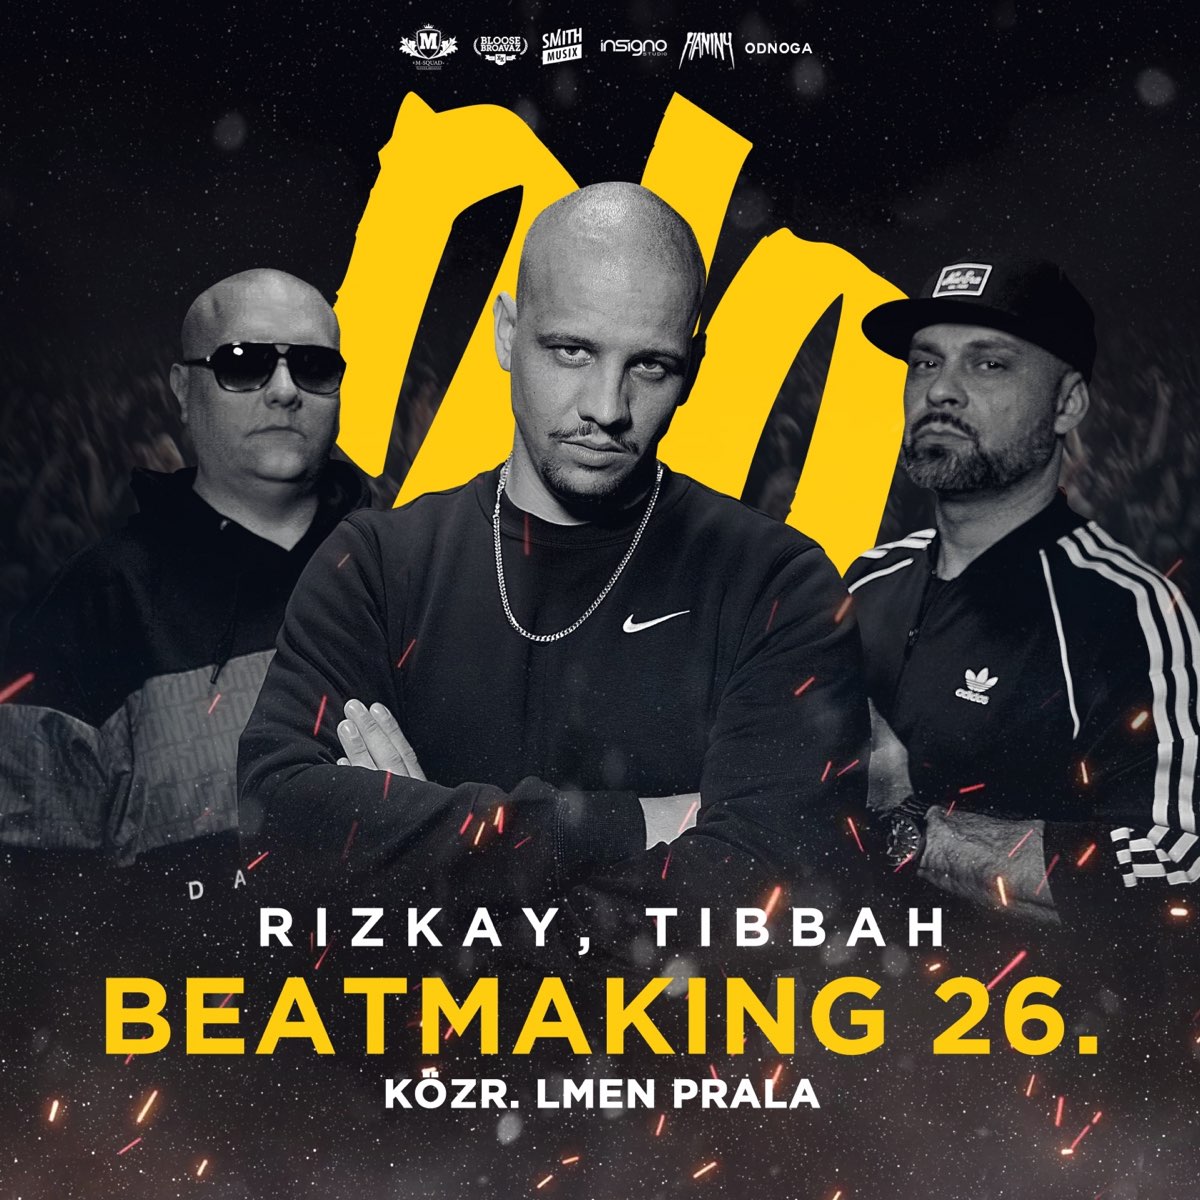 Beatmaking 26. (feat. Lmen Prala) - Single by Rizkay & Tibbah on Apple Music